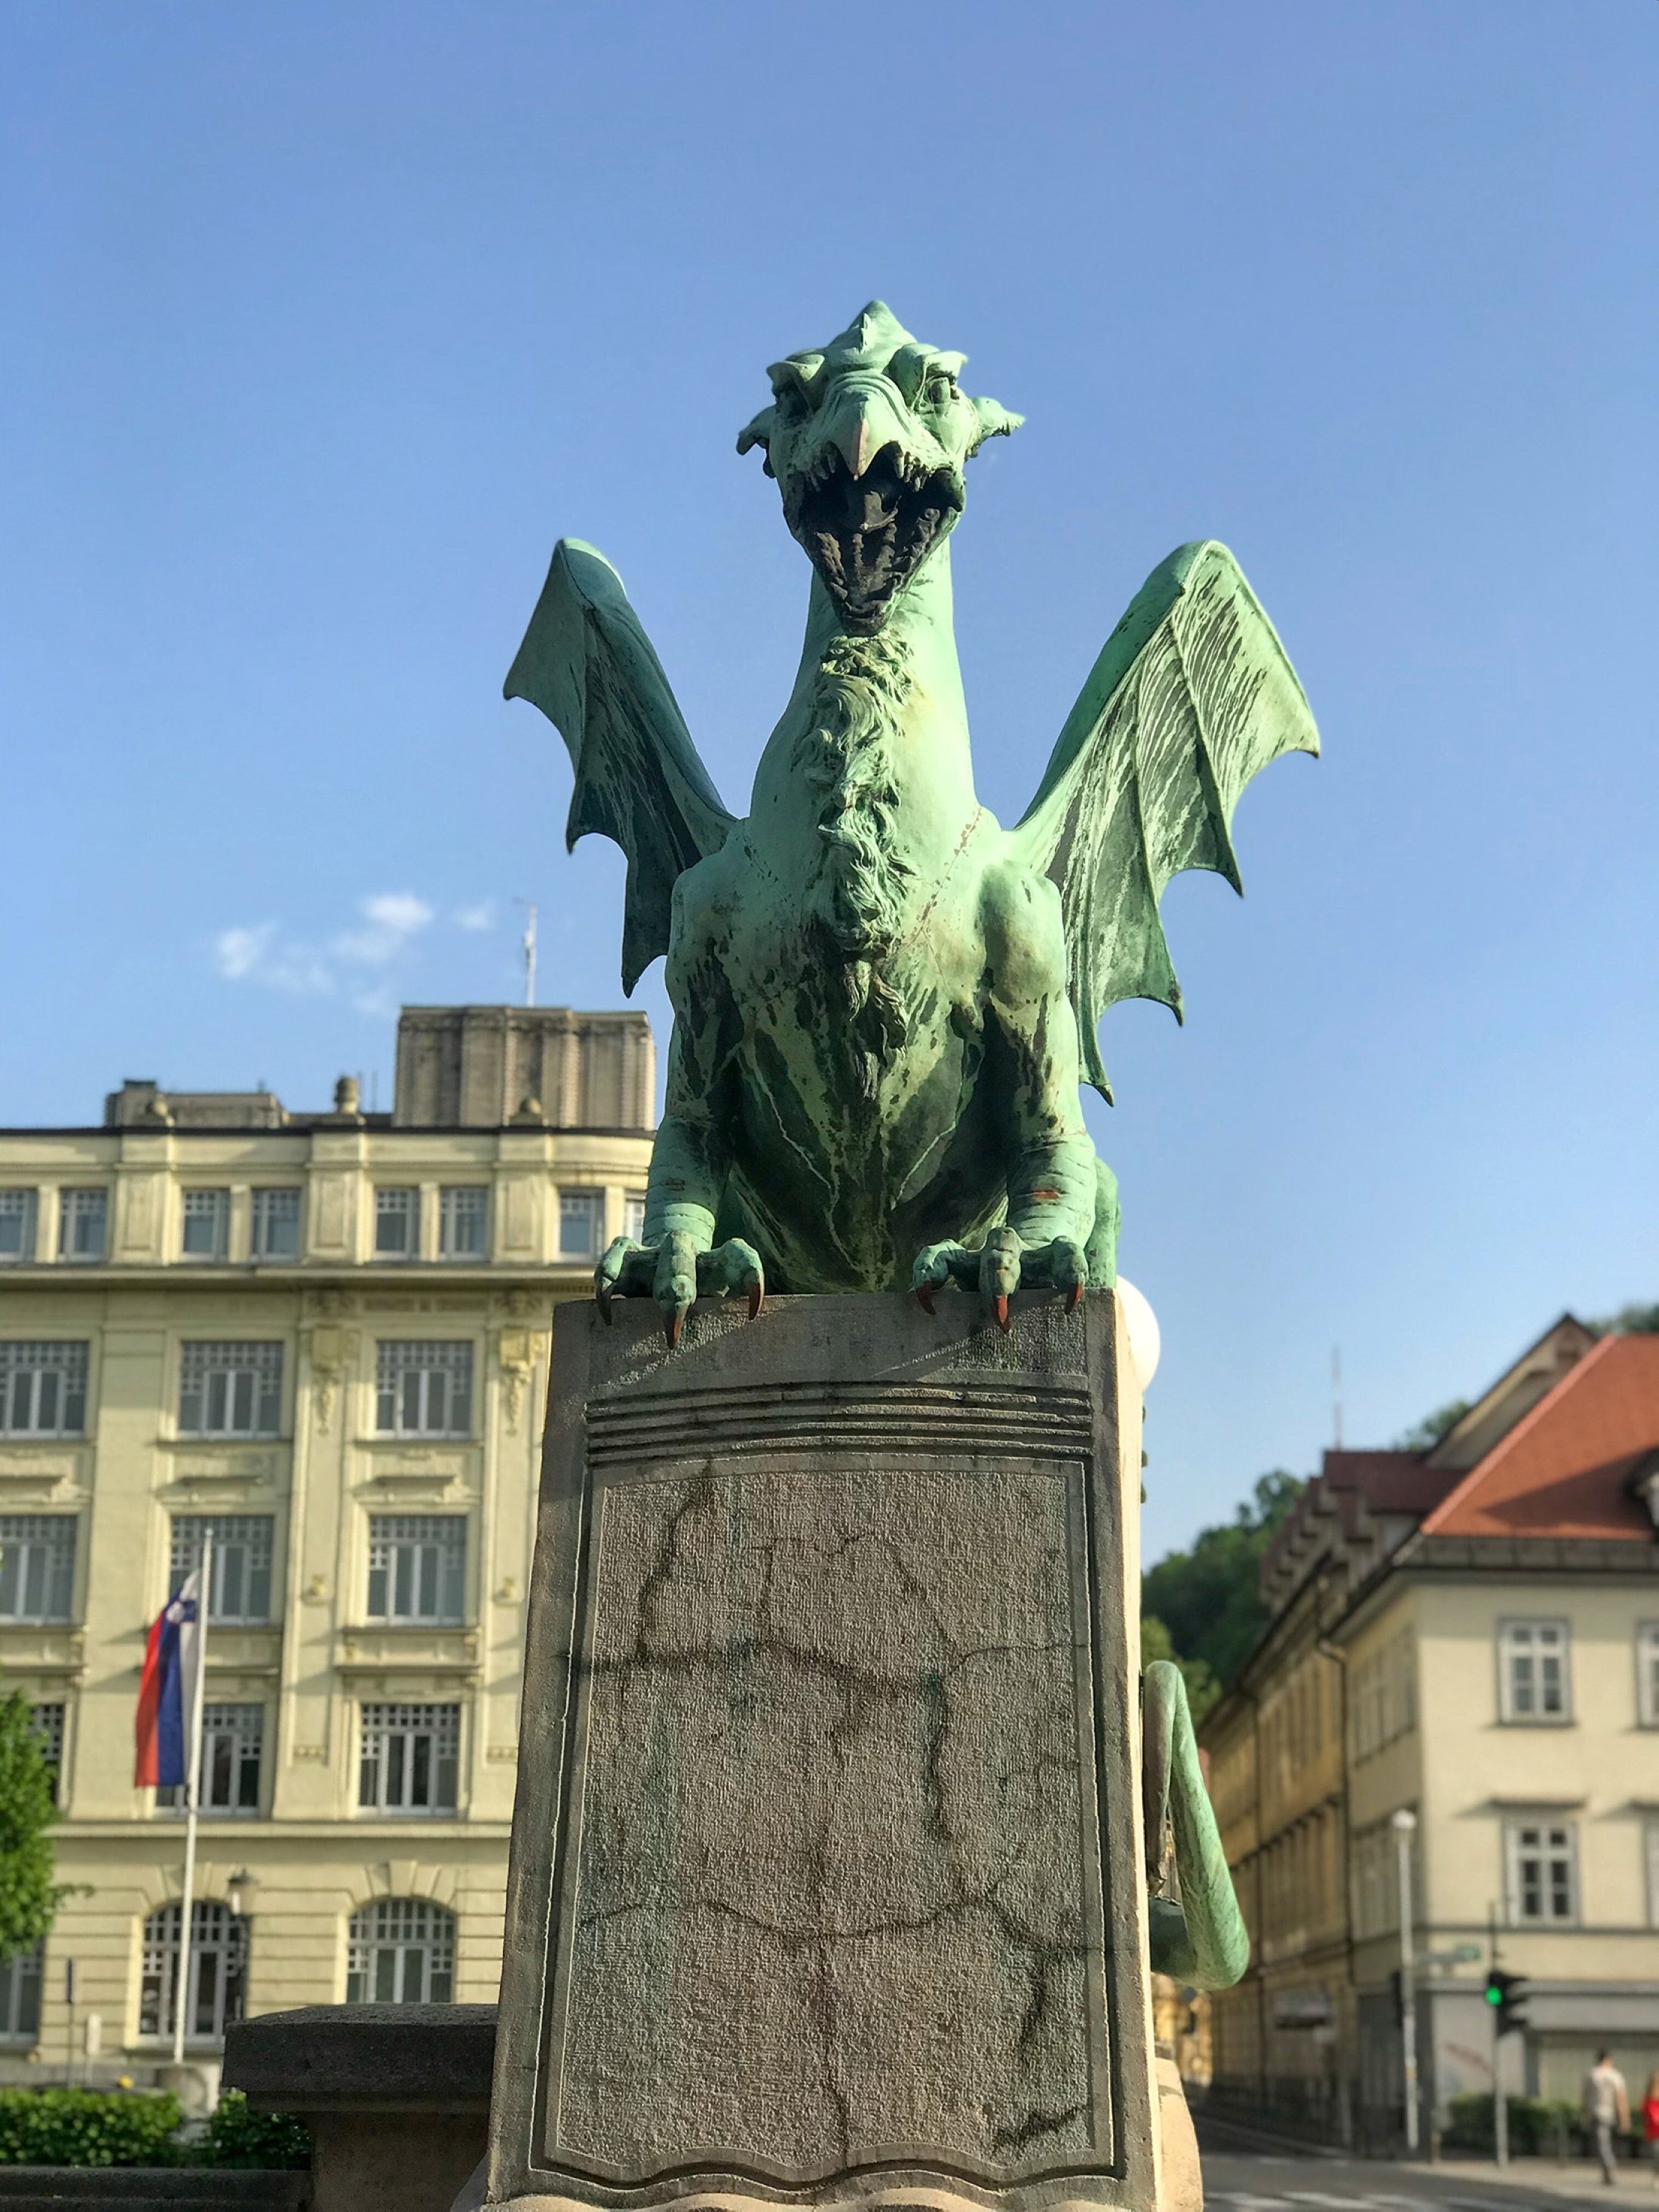 Jembatan Naga memiliki dua patung naga yang megah di kedua ujungnya dengan legenda yang melekat, di Ljubljana, Slovenia.  (Foto oleh zge engelen)